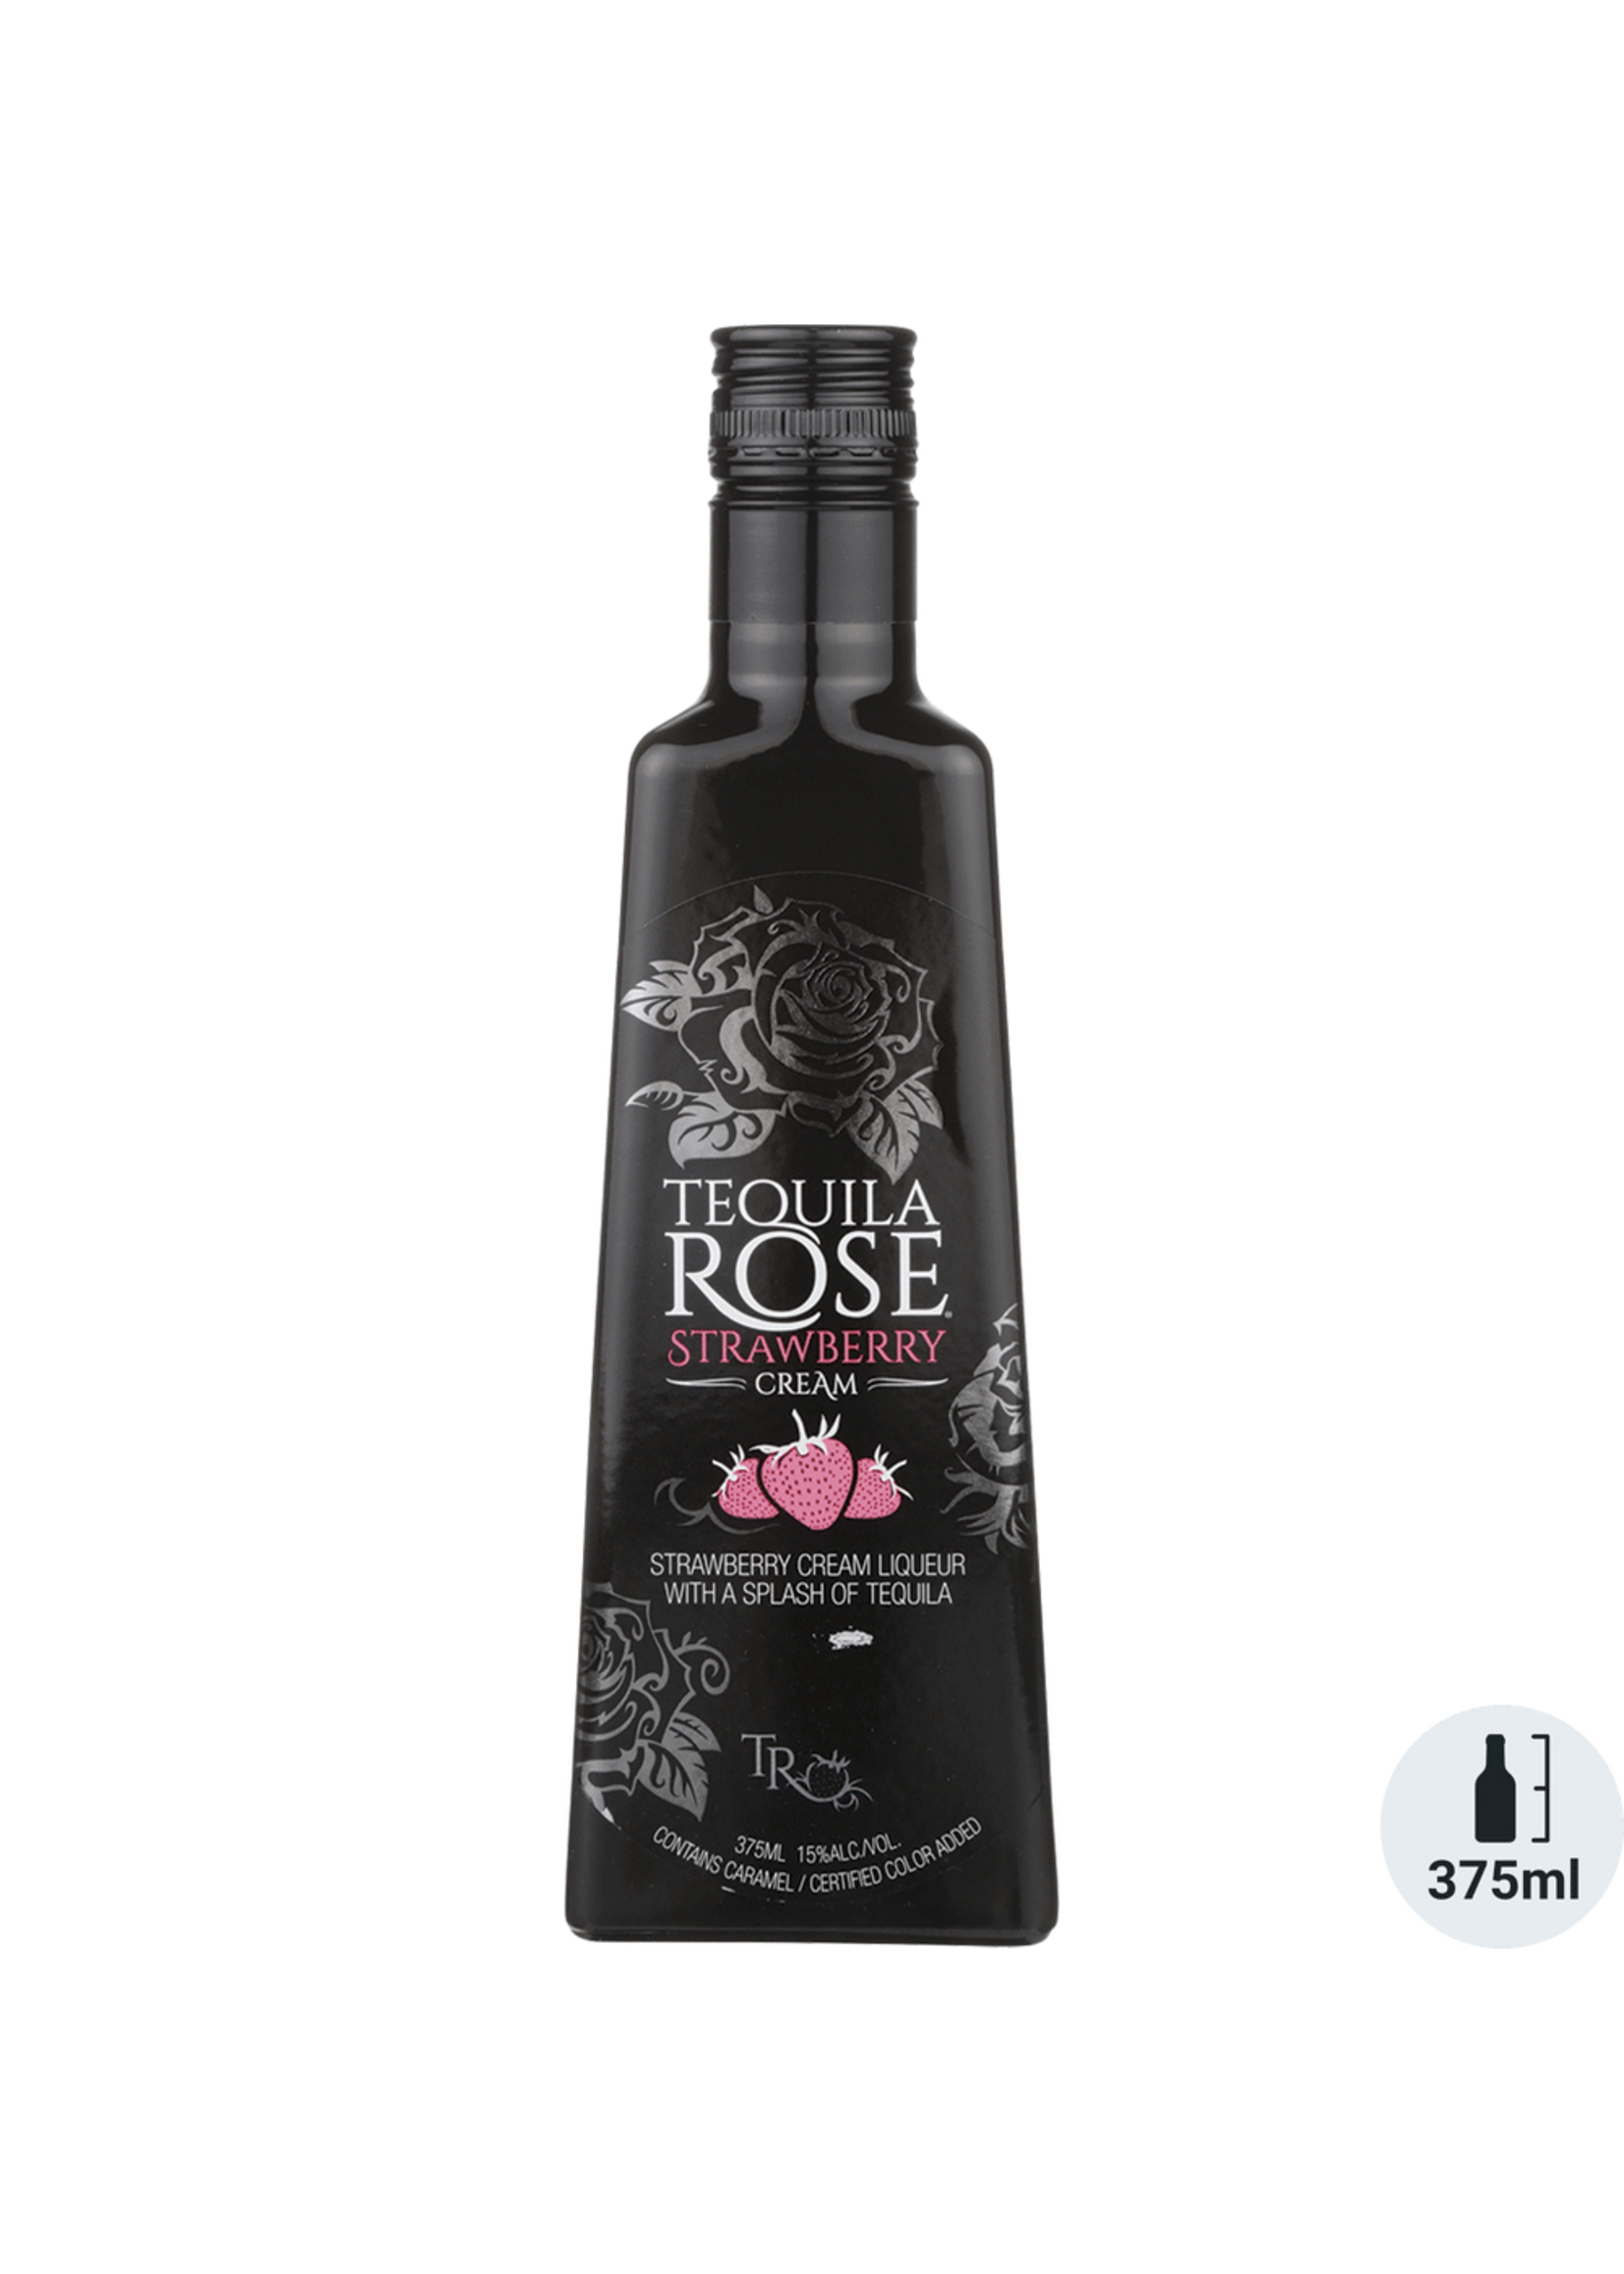 Tequila Rose Strawberry Cream Liqueur 30Proof 375ml